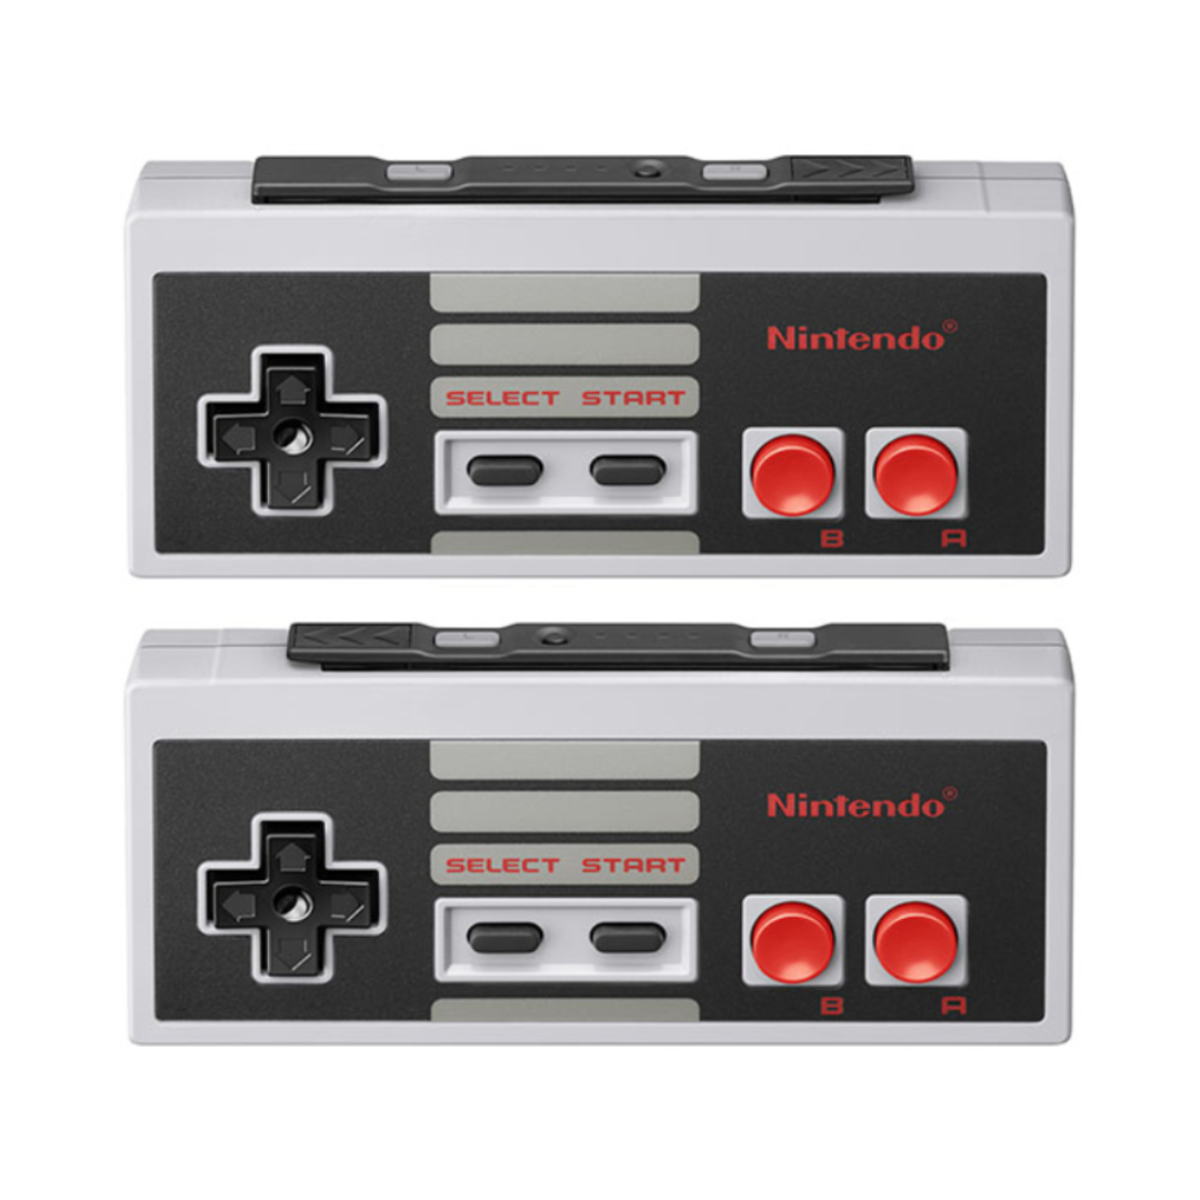 Nintendo control. Геймпад NES для Nintendo Switch. Геймпад Nintendo Switch NES Classic. Нинтендо джойстик Нинтендо. Джойстик нес для Нинтендо свитч.